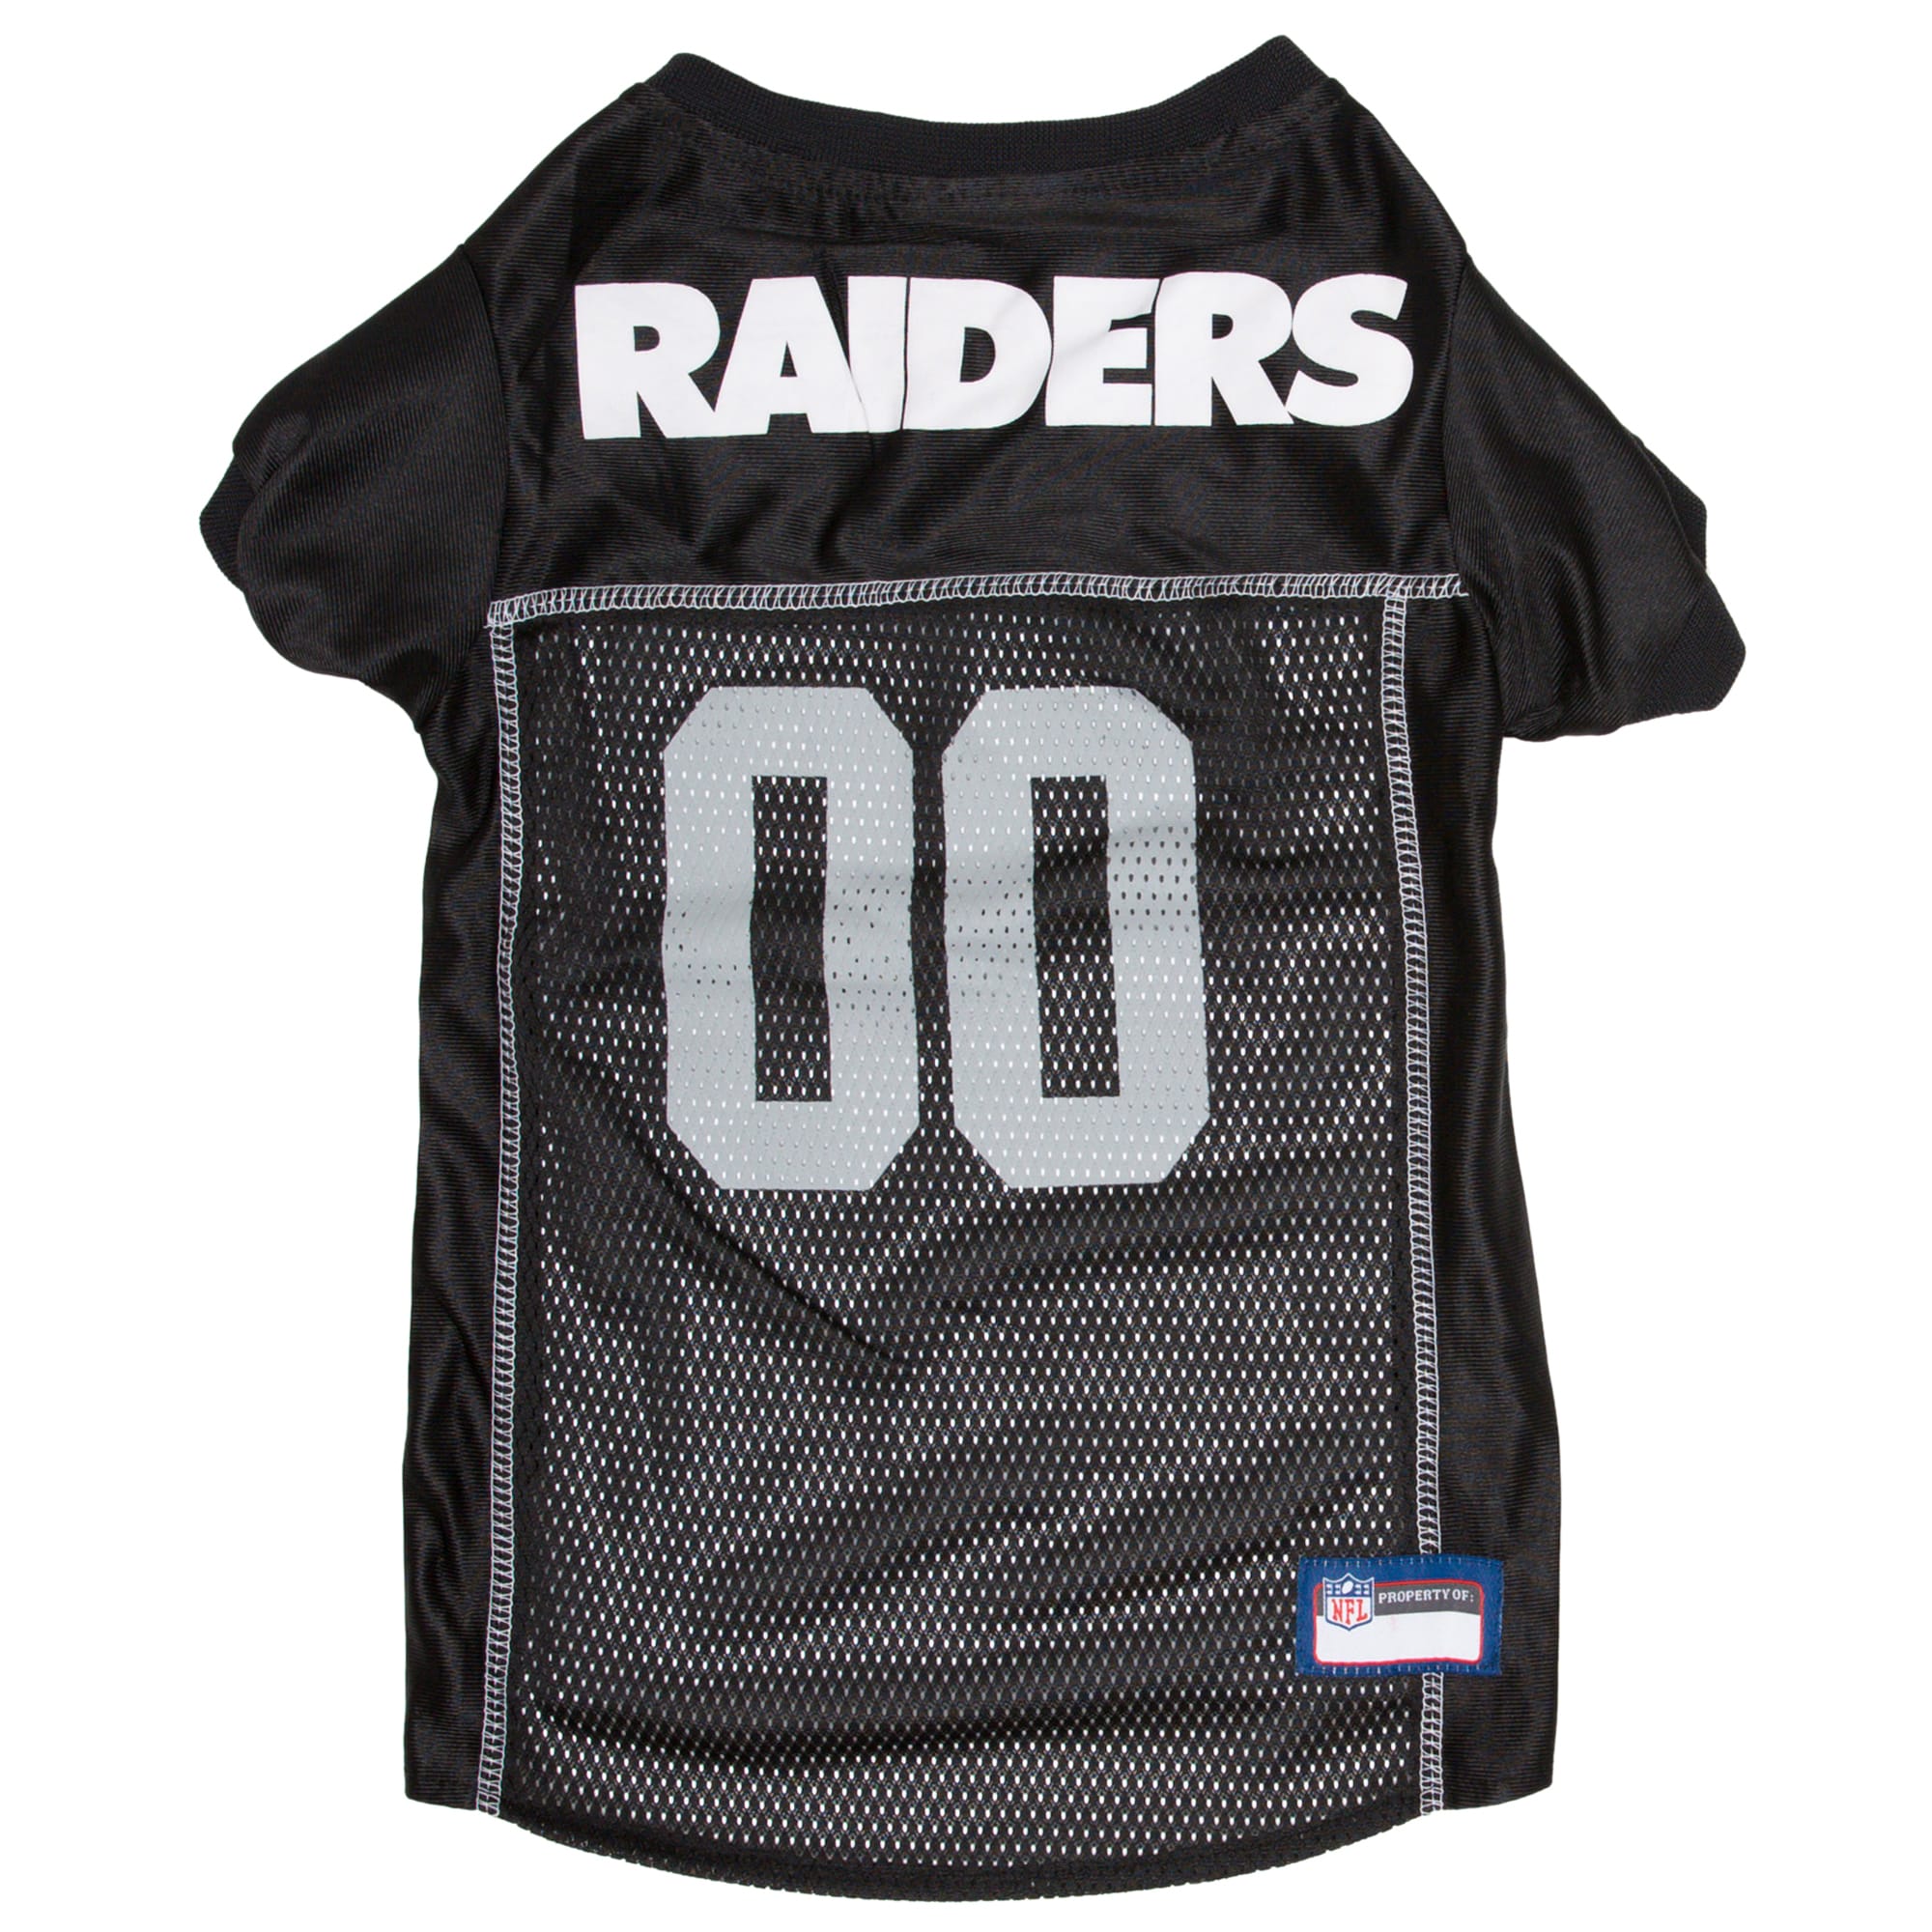 buy raiders jersey